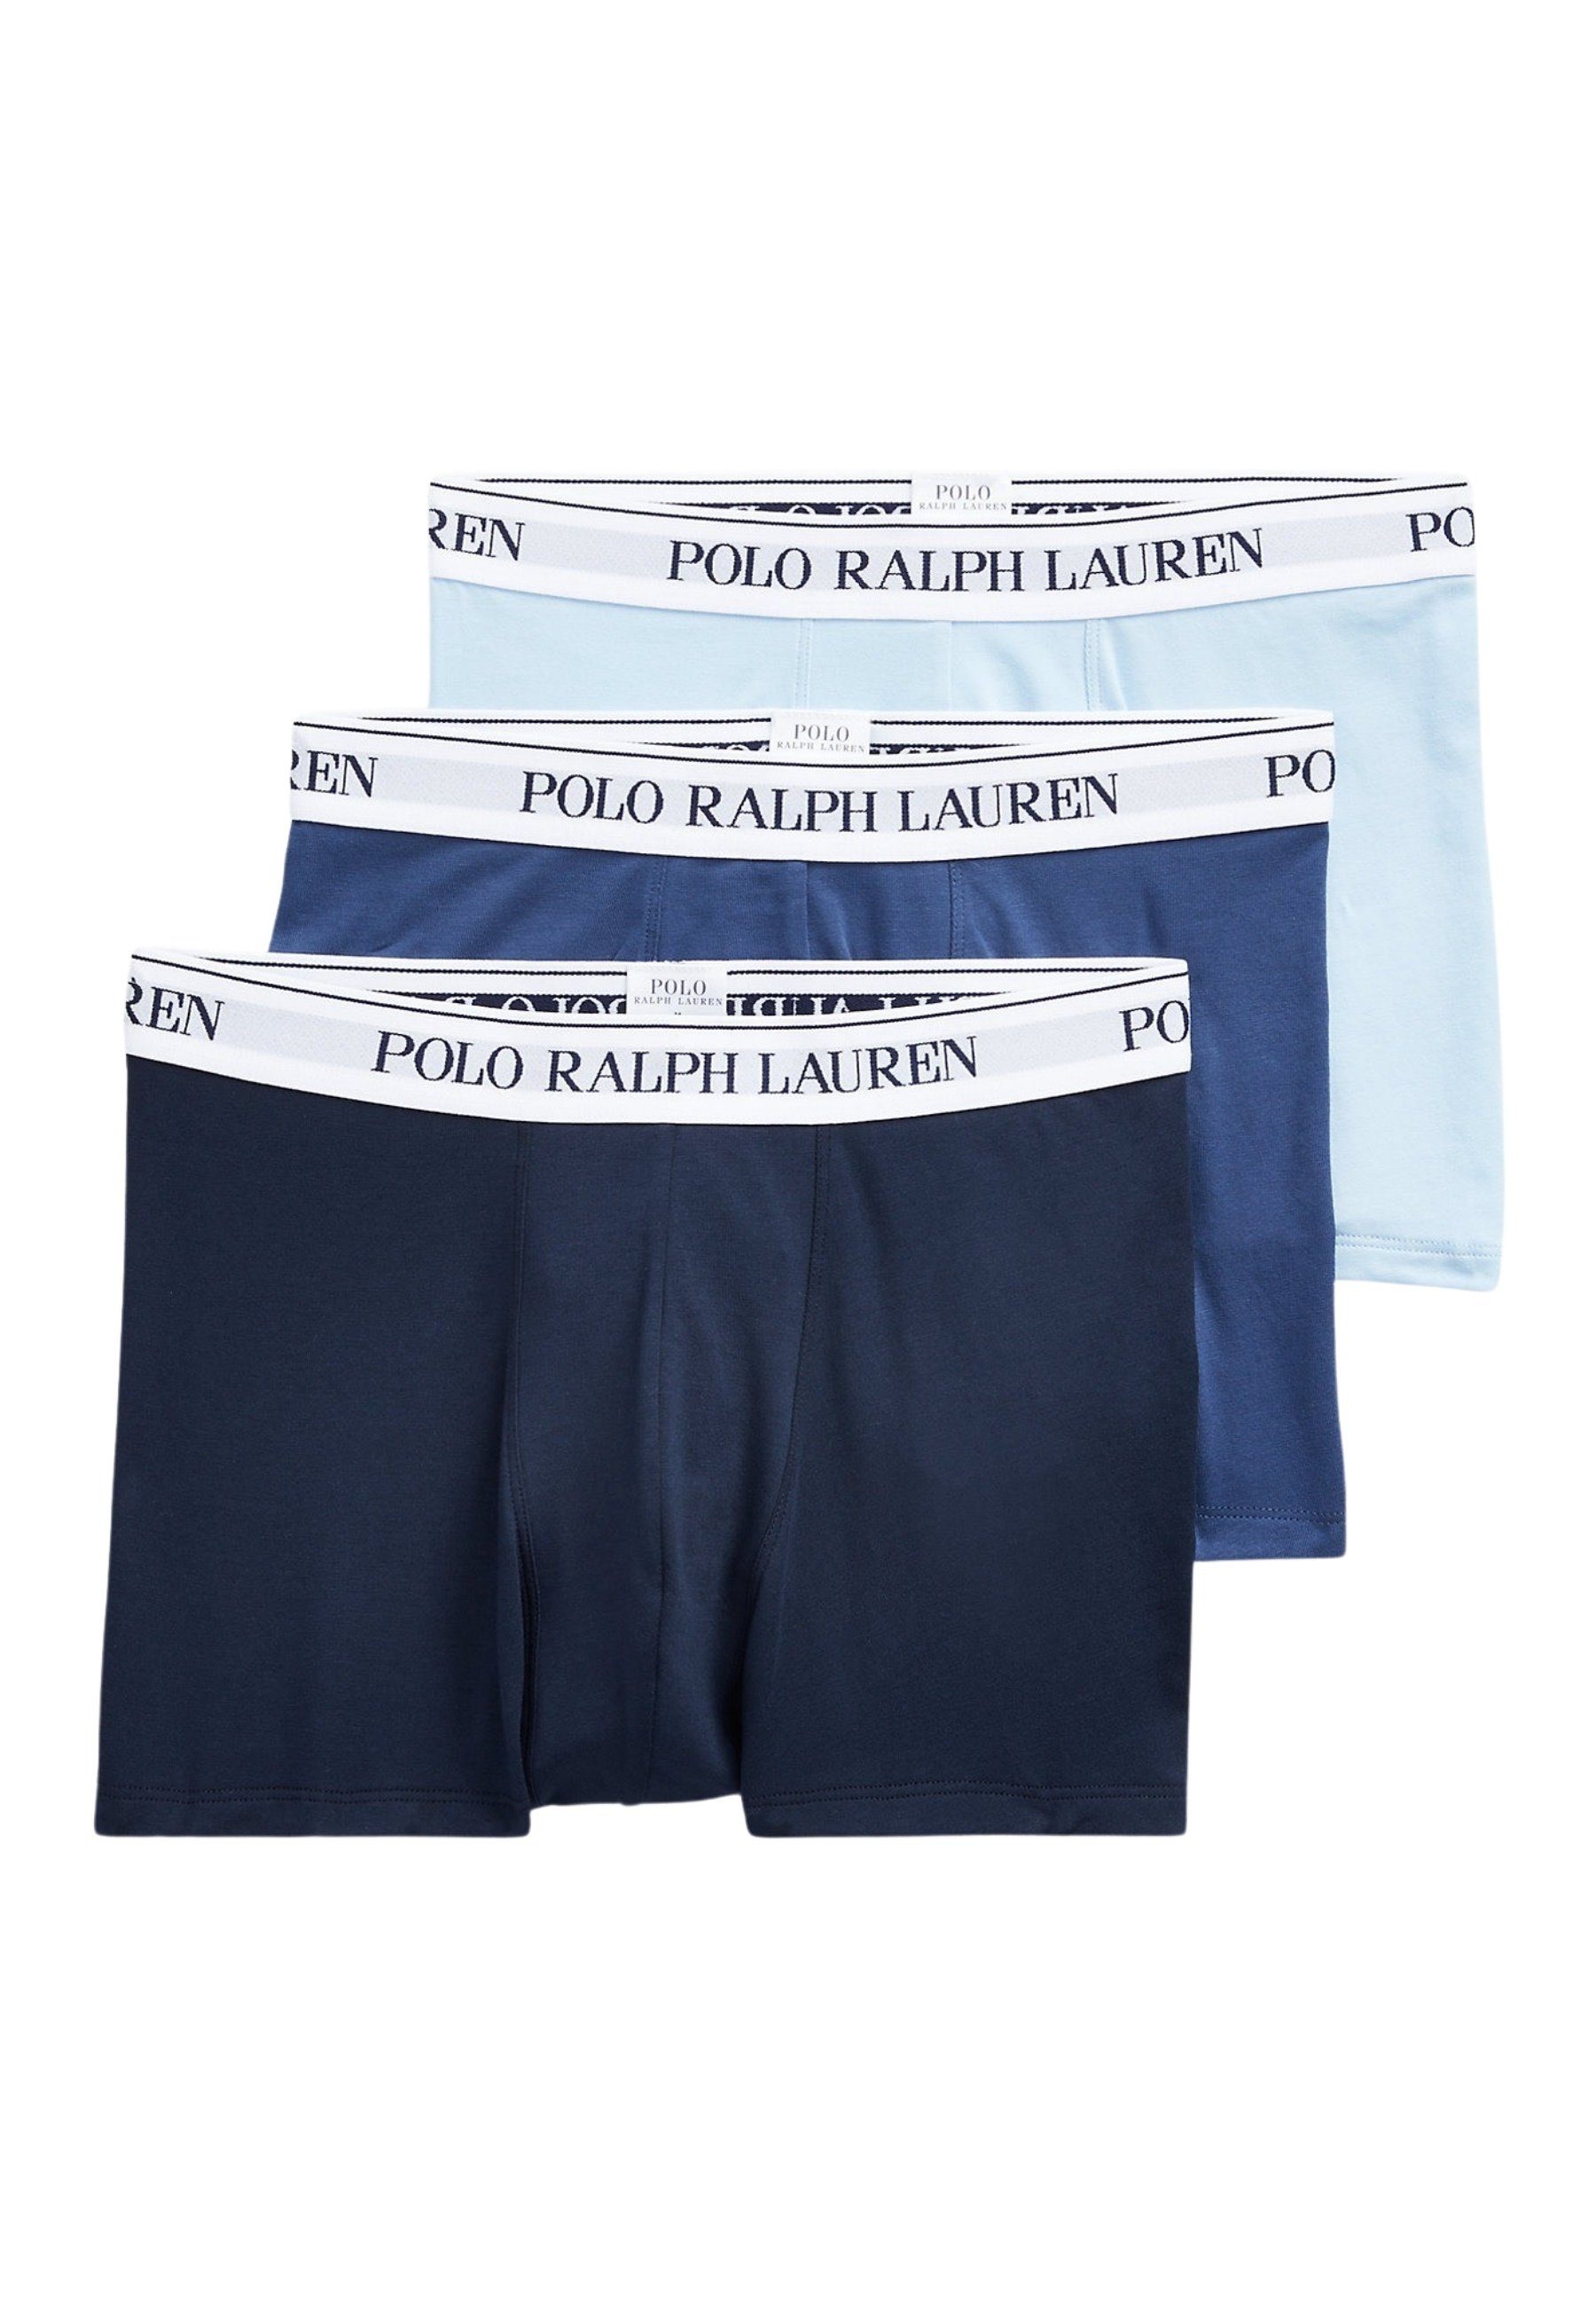 Polo Ralph Lauren Ralph Lauren Boxershorts Unterhose Trunks 3er Pack (3-St) Dunkelblau/Hellblau